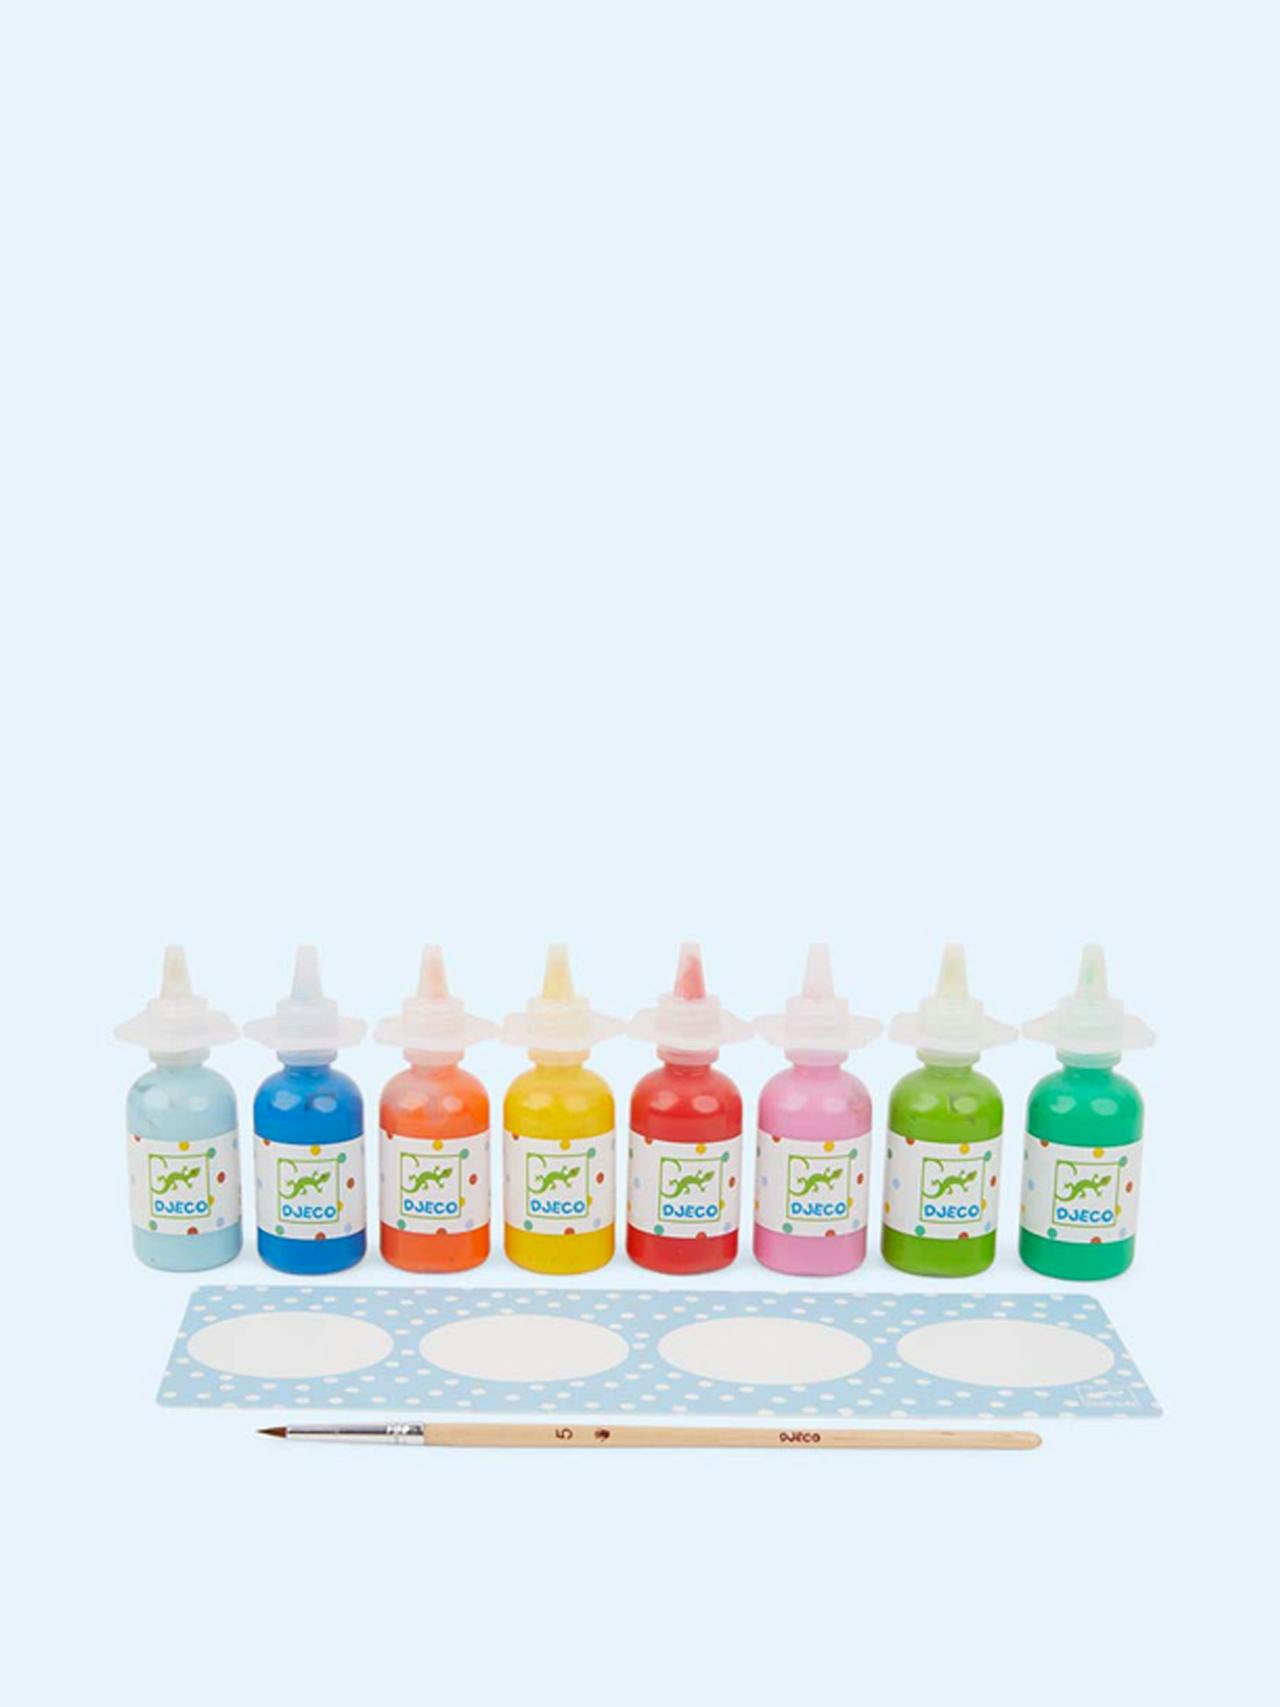 8 bottles of poster paint